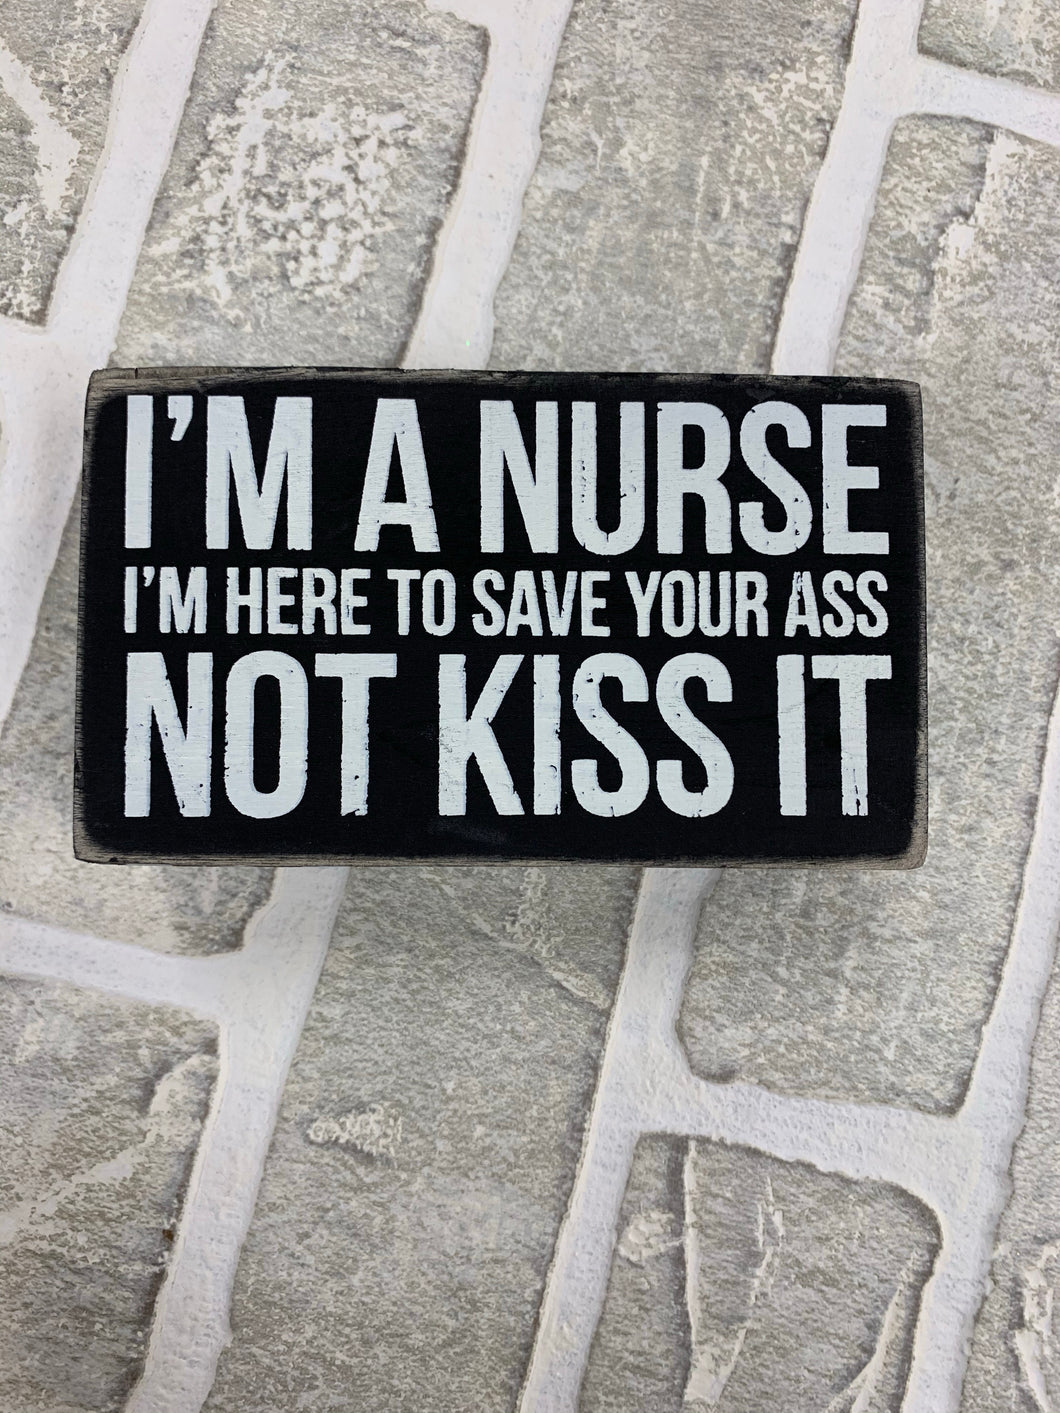 I’m a nurse box sign